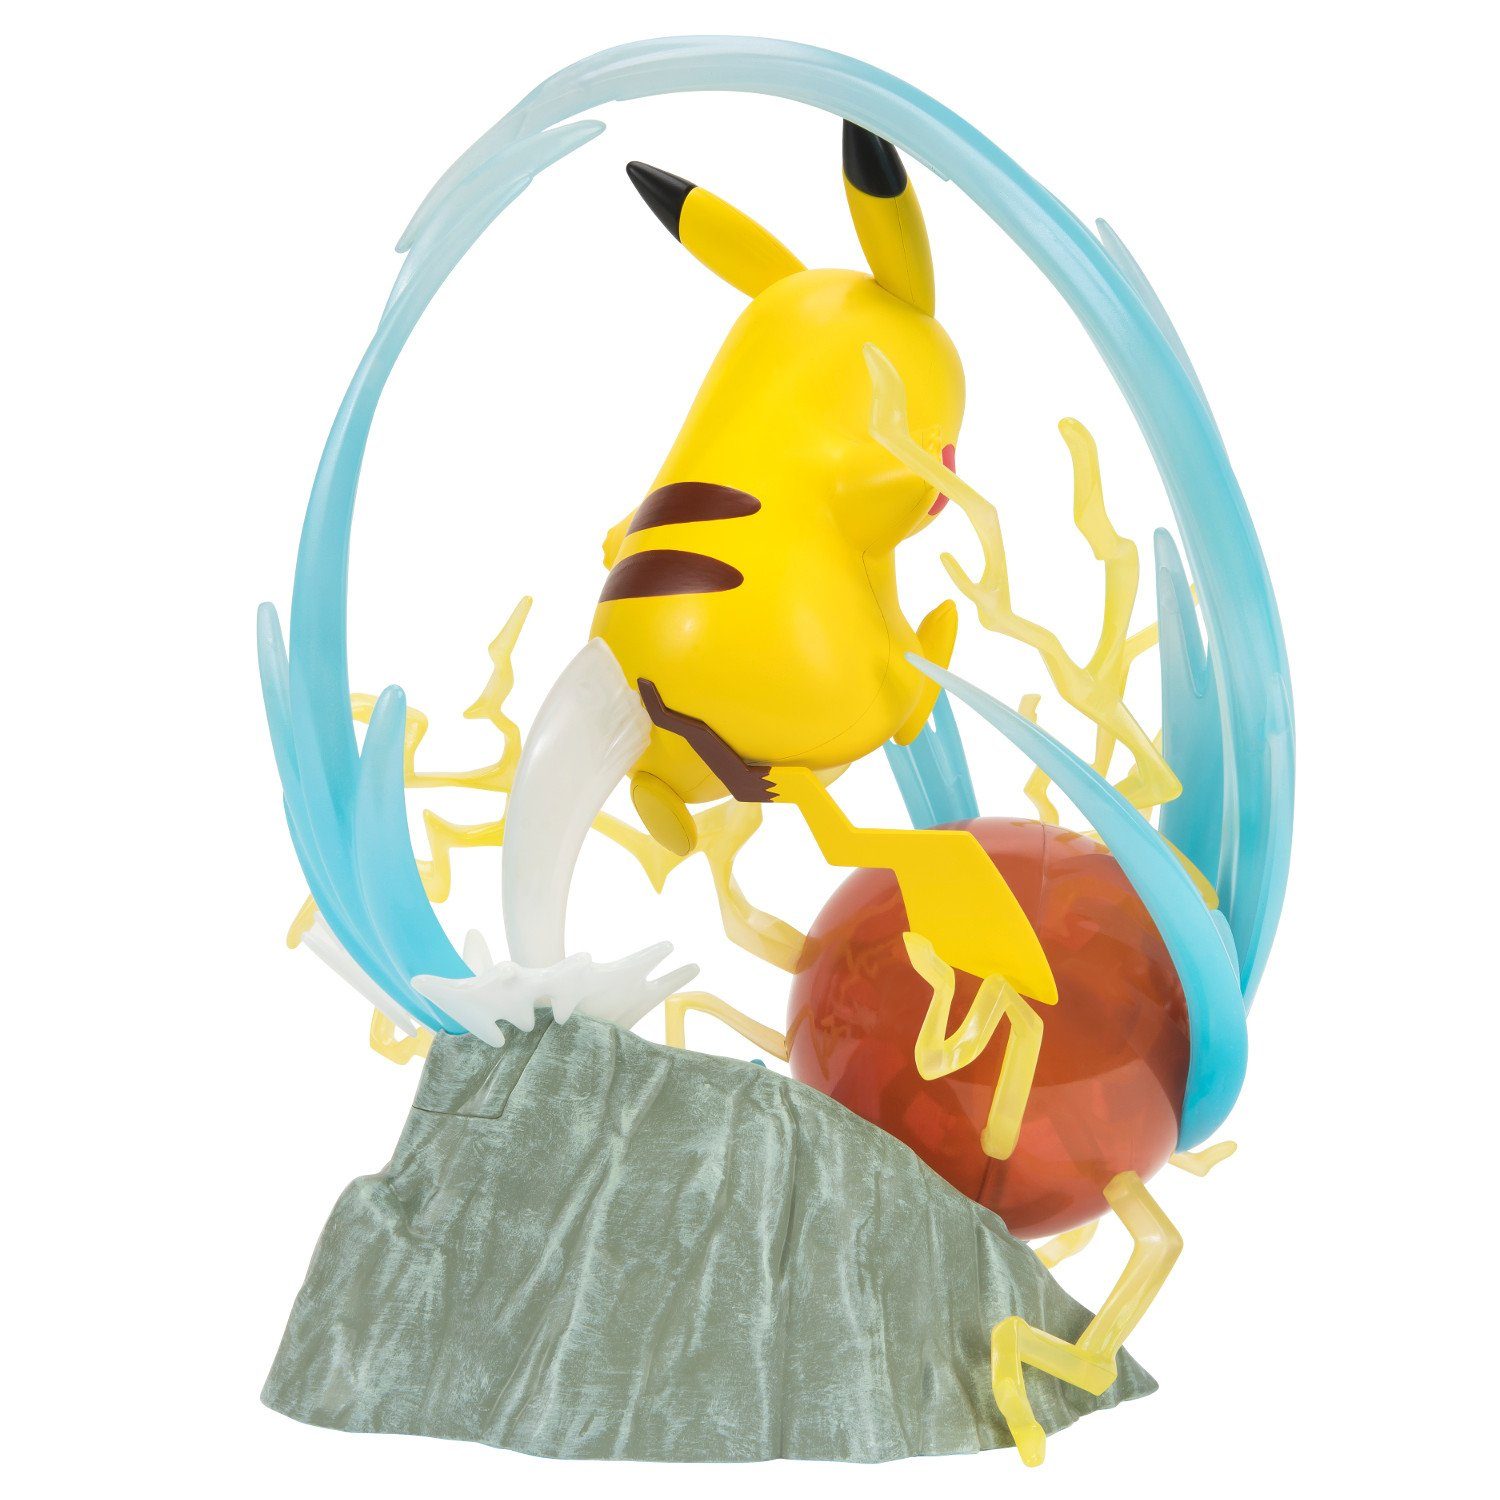 Spielfigur Pikachu Jazwares Deluxe Pokemon PKW2370, Sammlerfigur